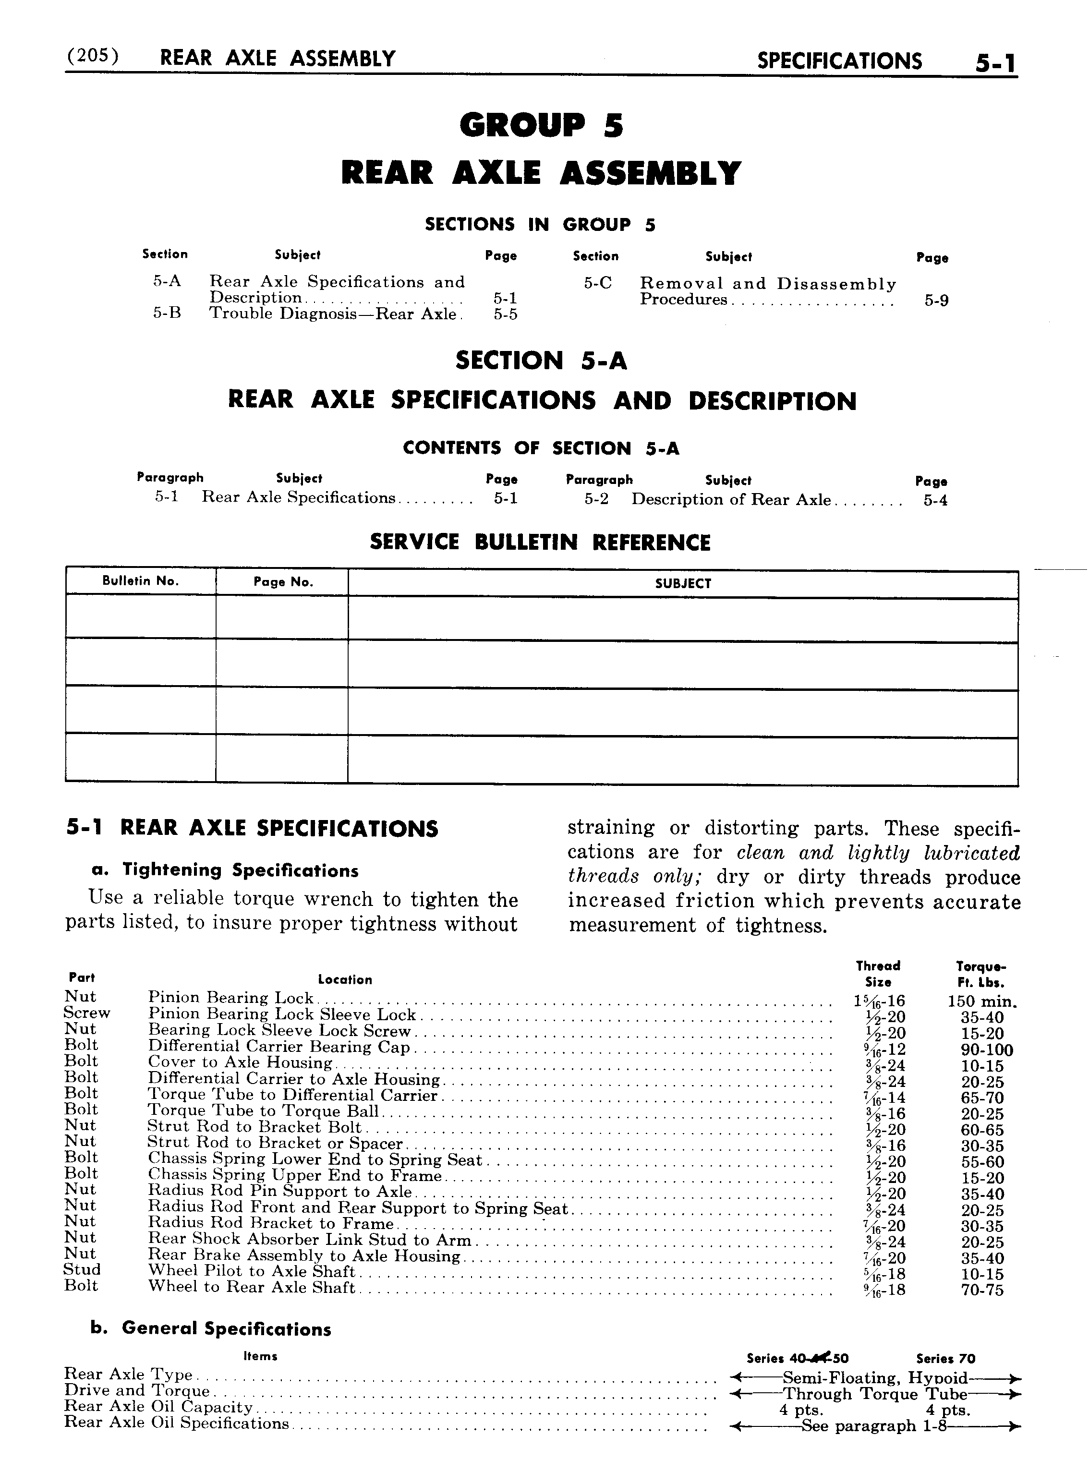 n_06 1951 Buick Shop Manual - Rear Axle-001-001.jpg